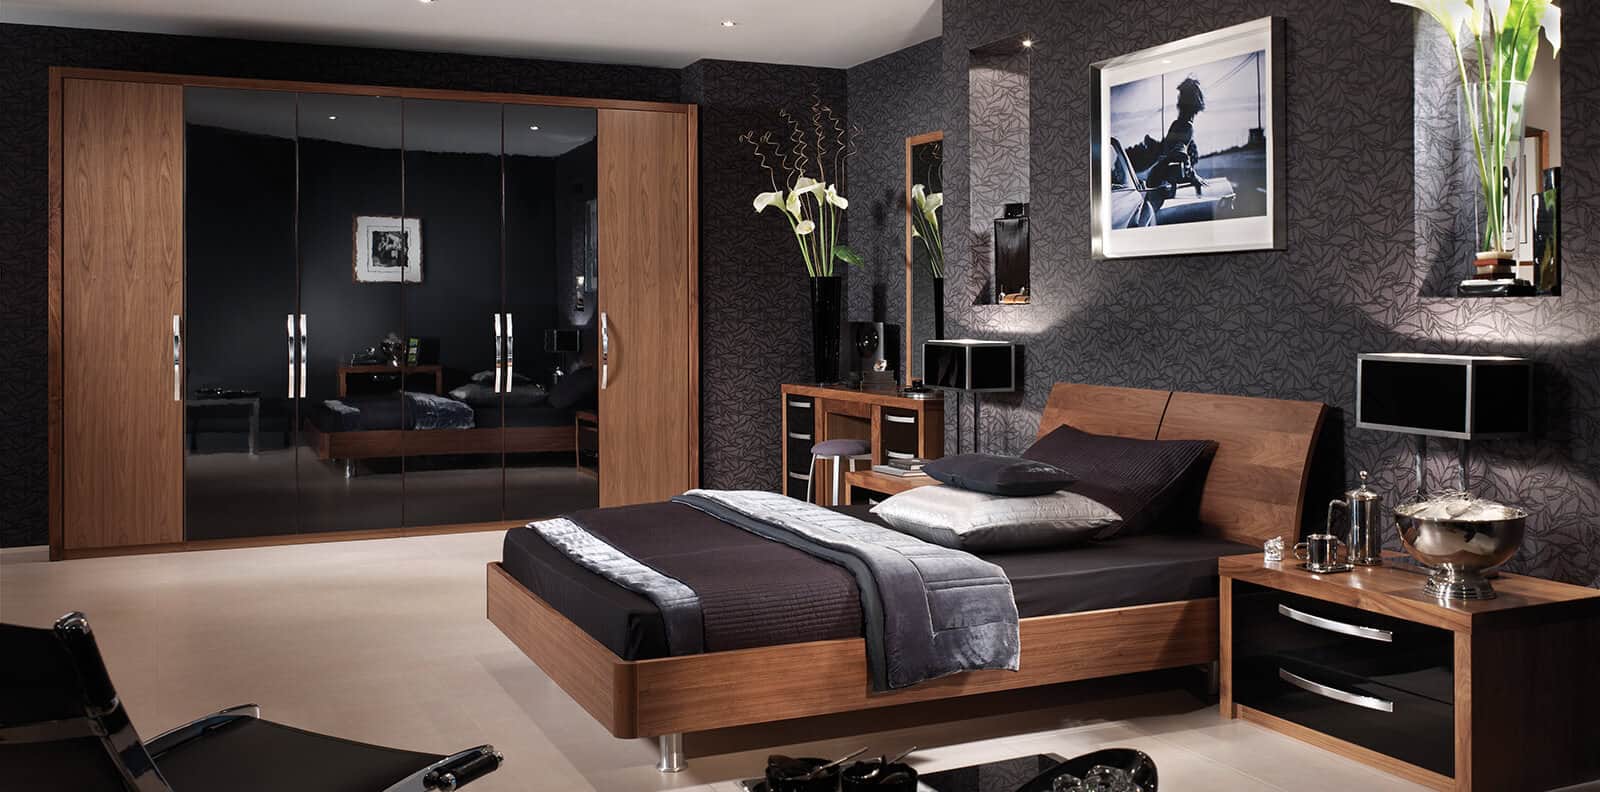 walnut and black bedroom furniture